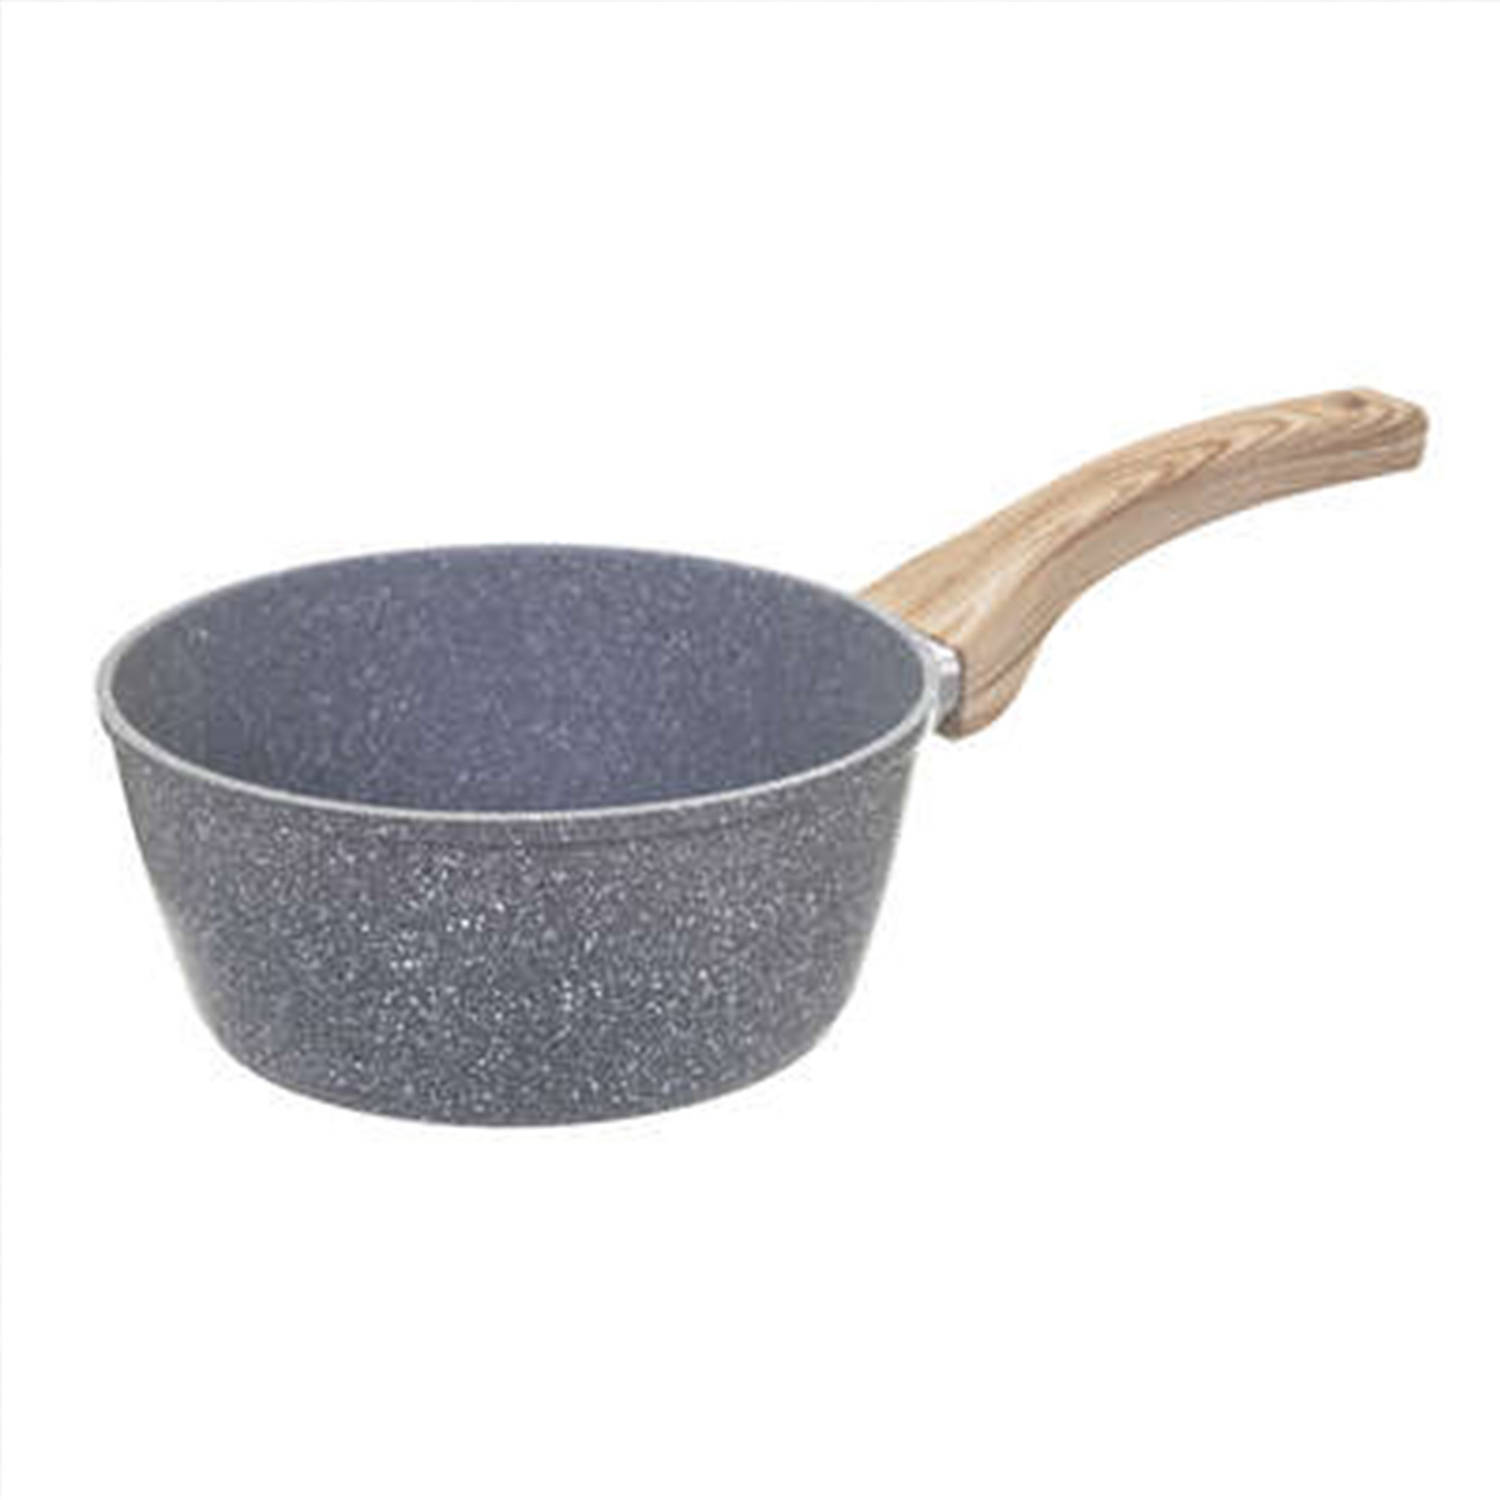 Steelpan-sauspan Alle kookplaten geschikt grijs dia 21 cm Steelpannen